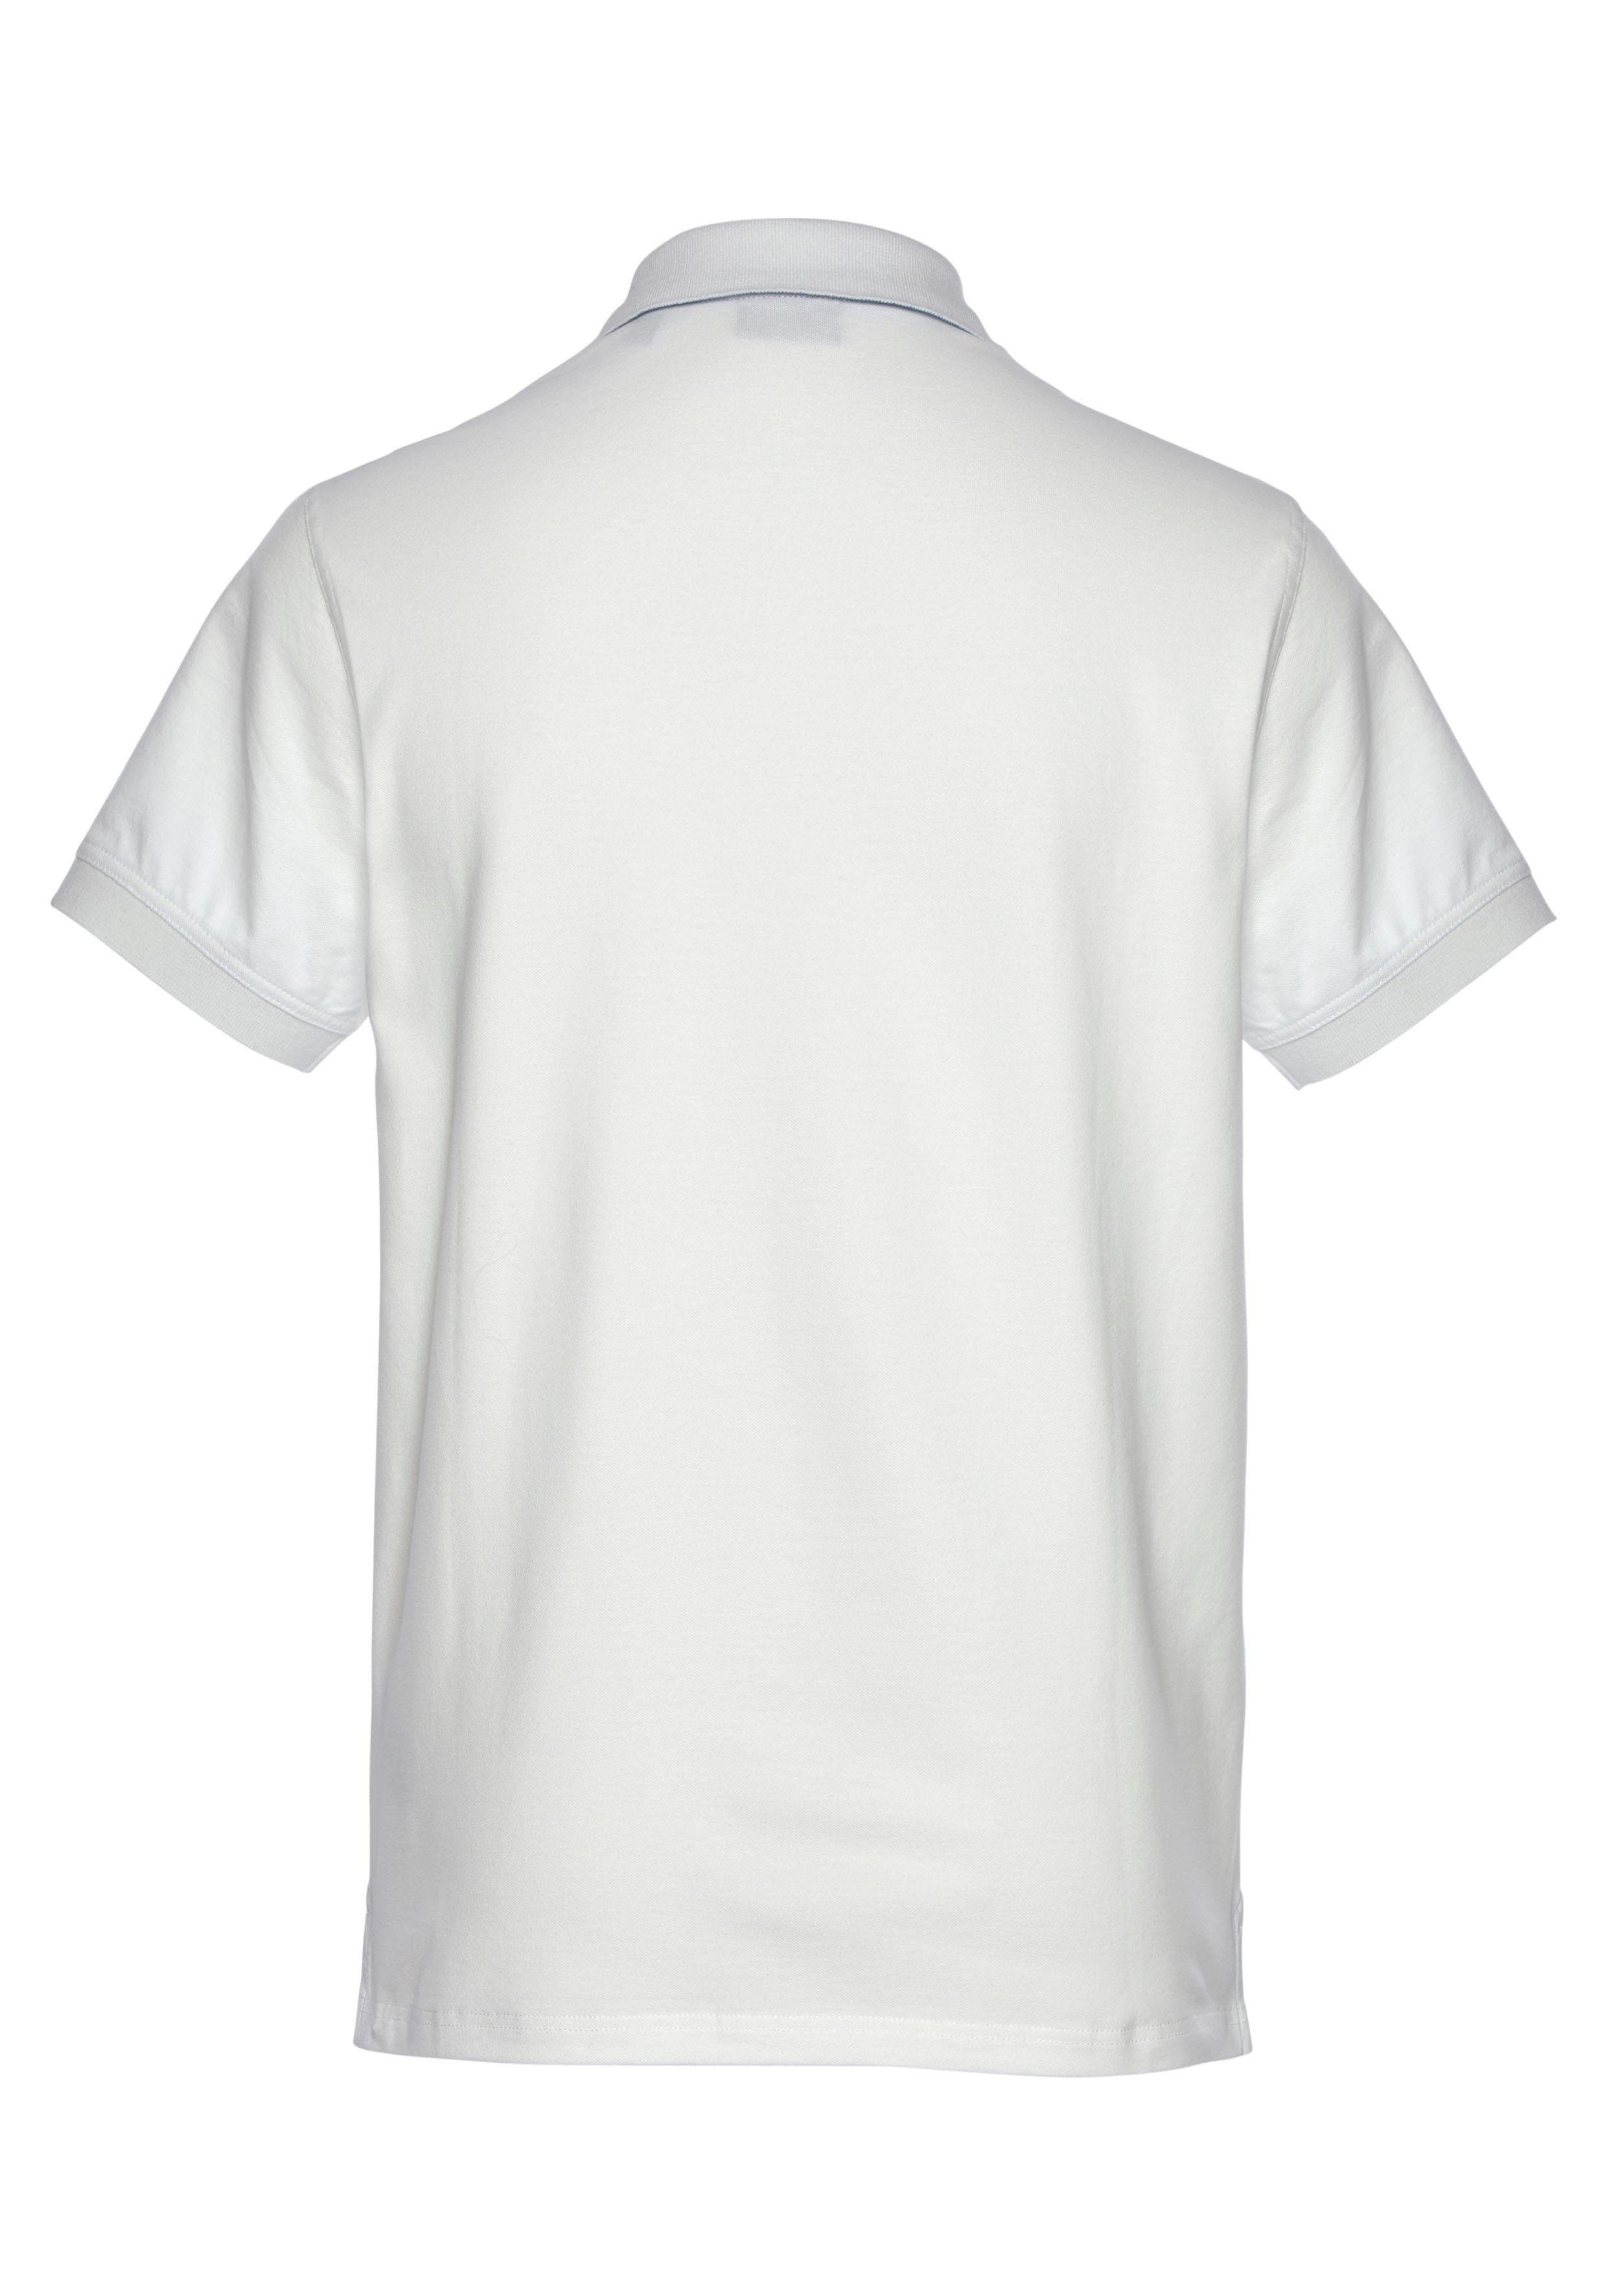 weiß-kontrastfarbene RUGGER, Gant Elasthan CONTRAST COLLAR durch SS formstabil PIQUE Details Poloshirt